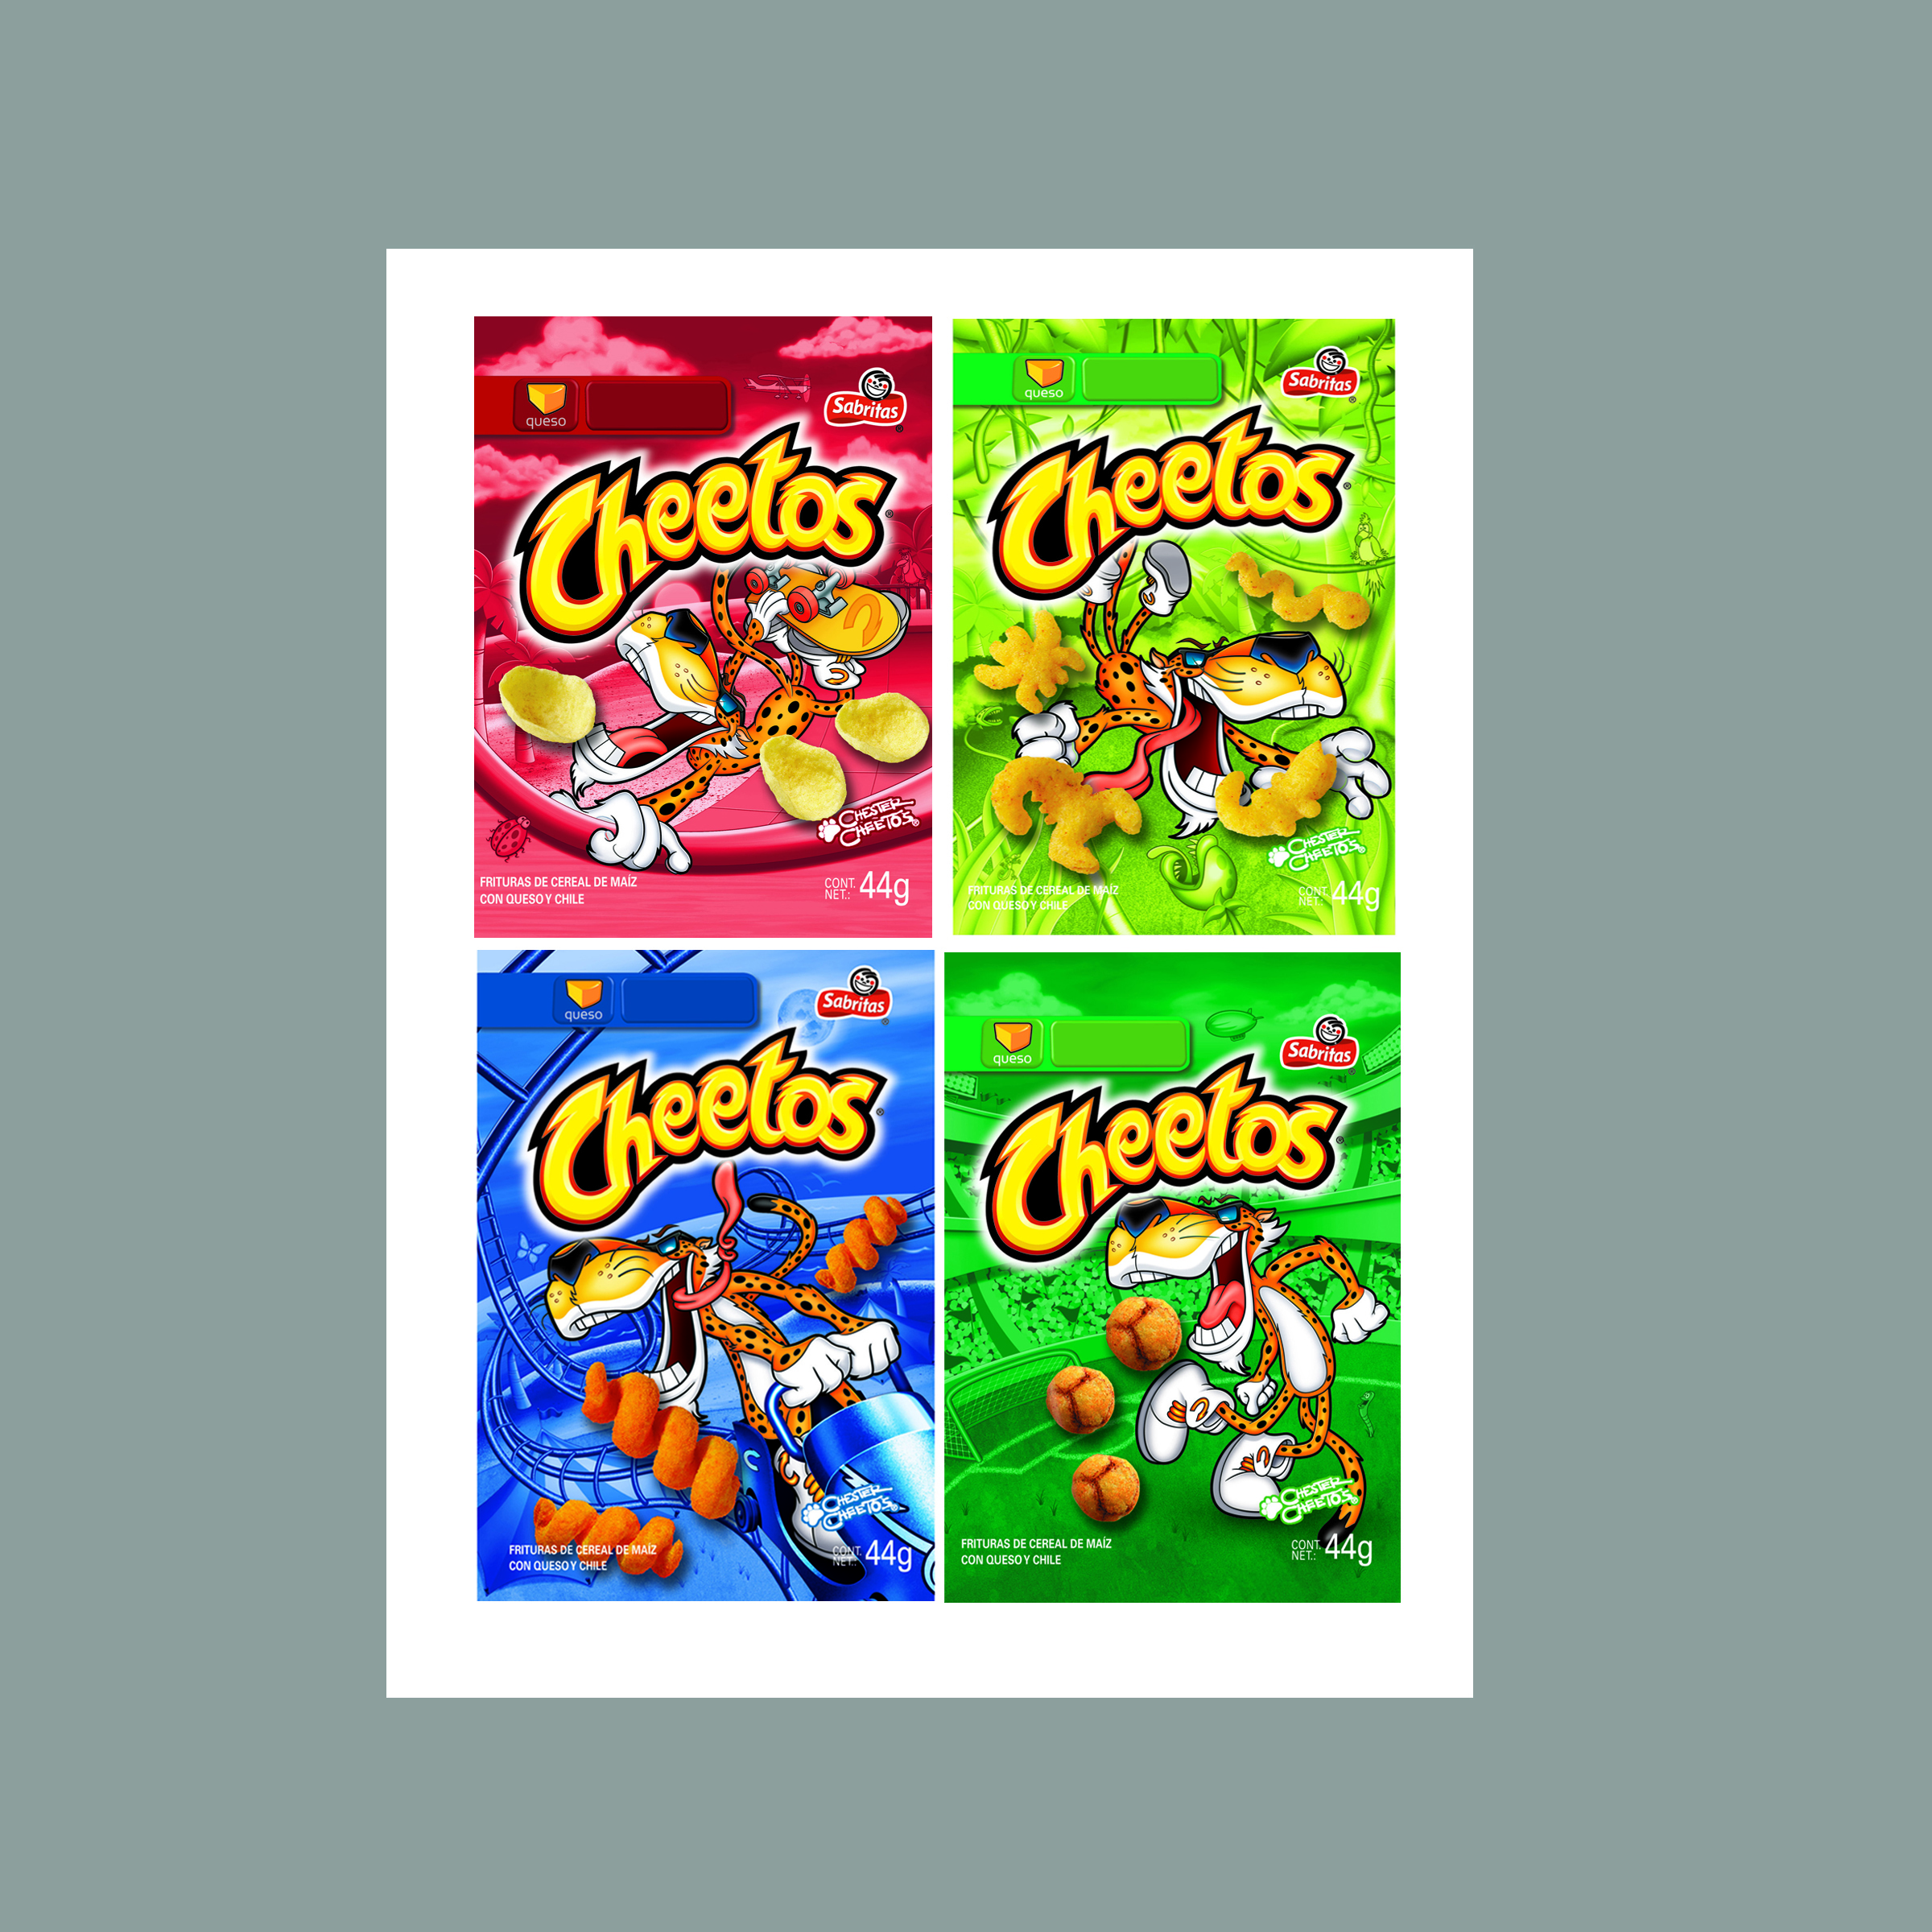 Cheetos_Packs